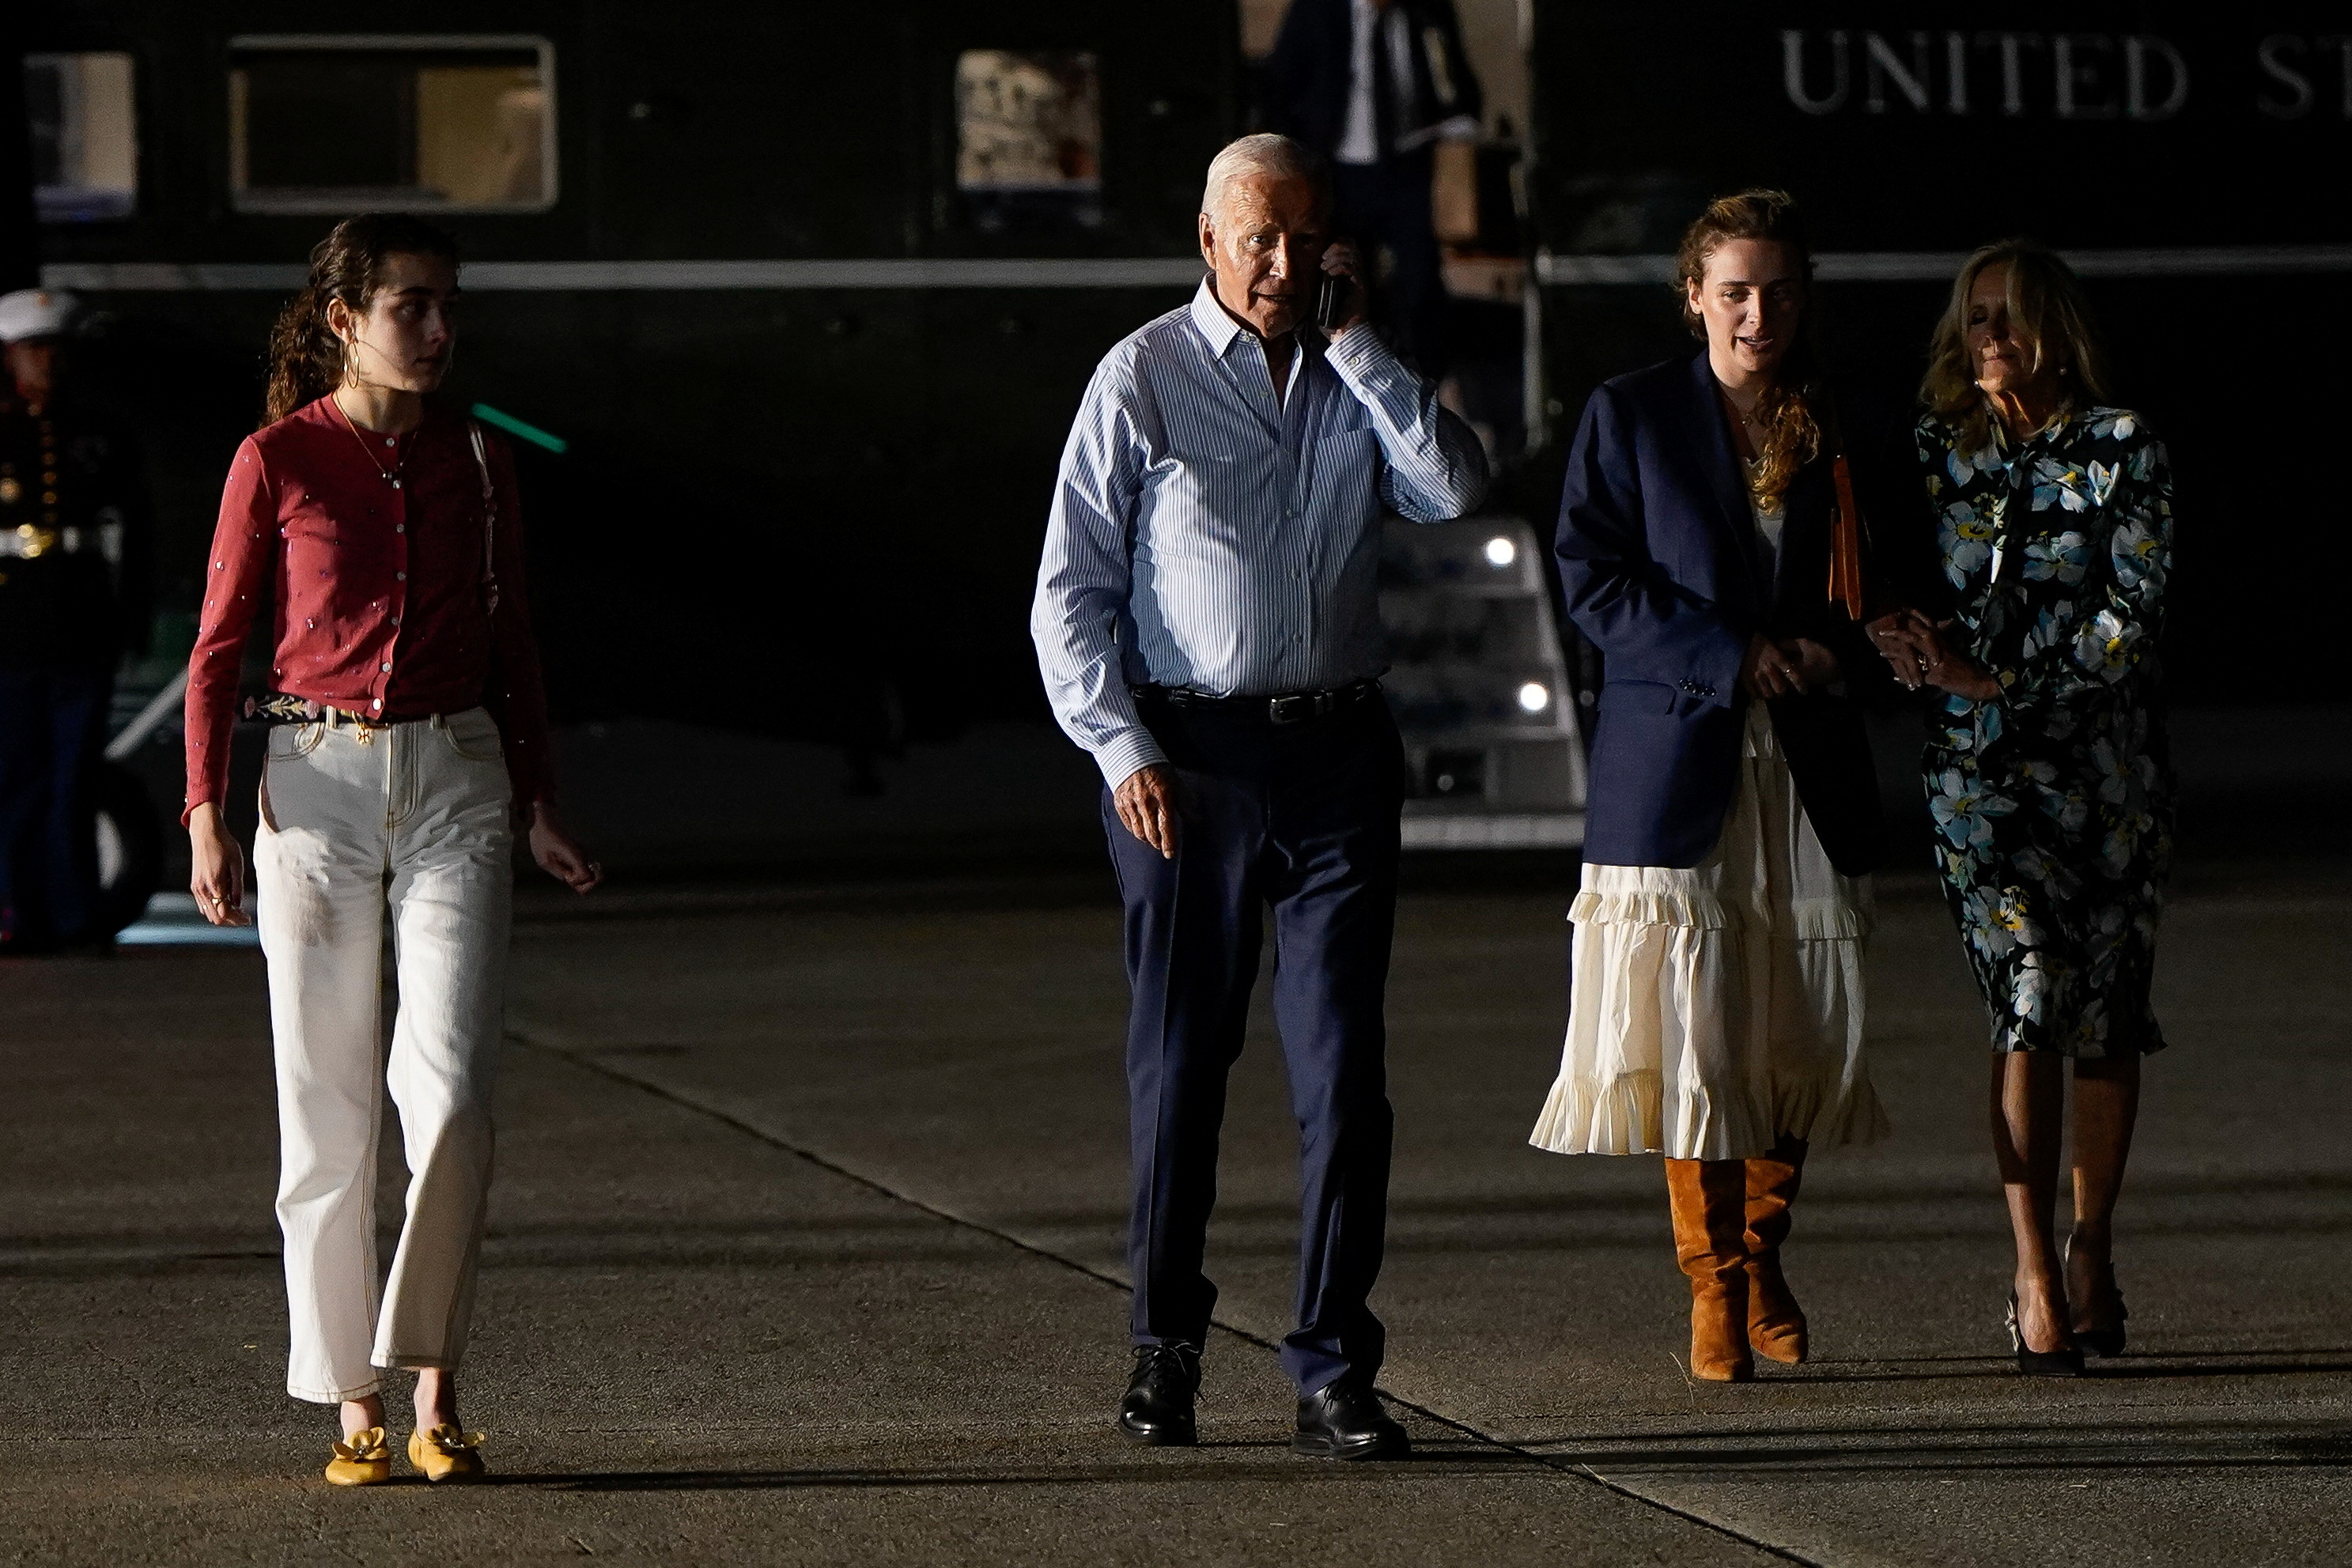 U.S. President Joe Biden travels to a campaign reception in New Jersey